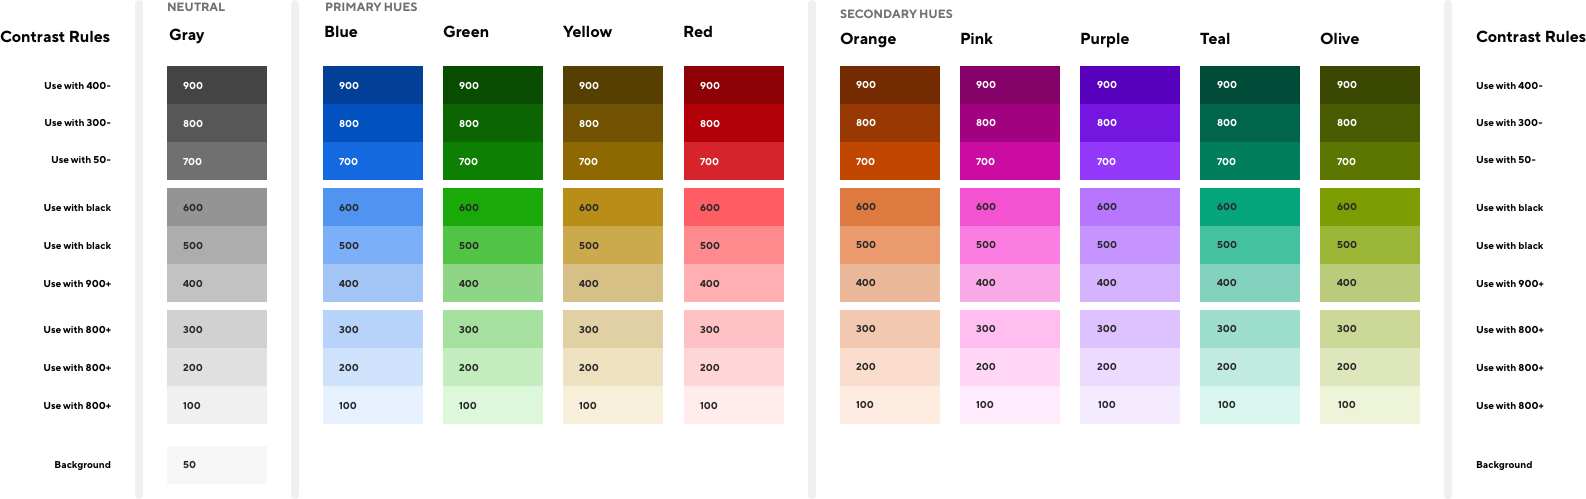 Final color system